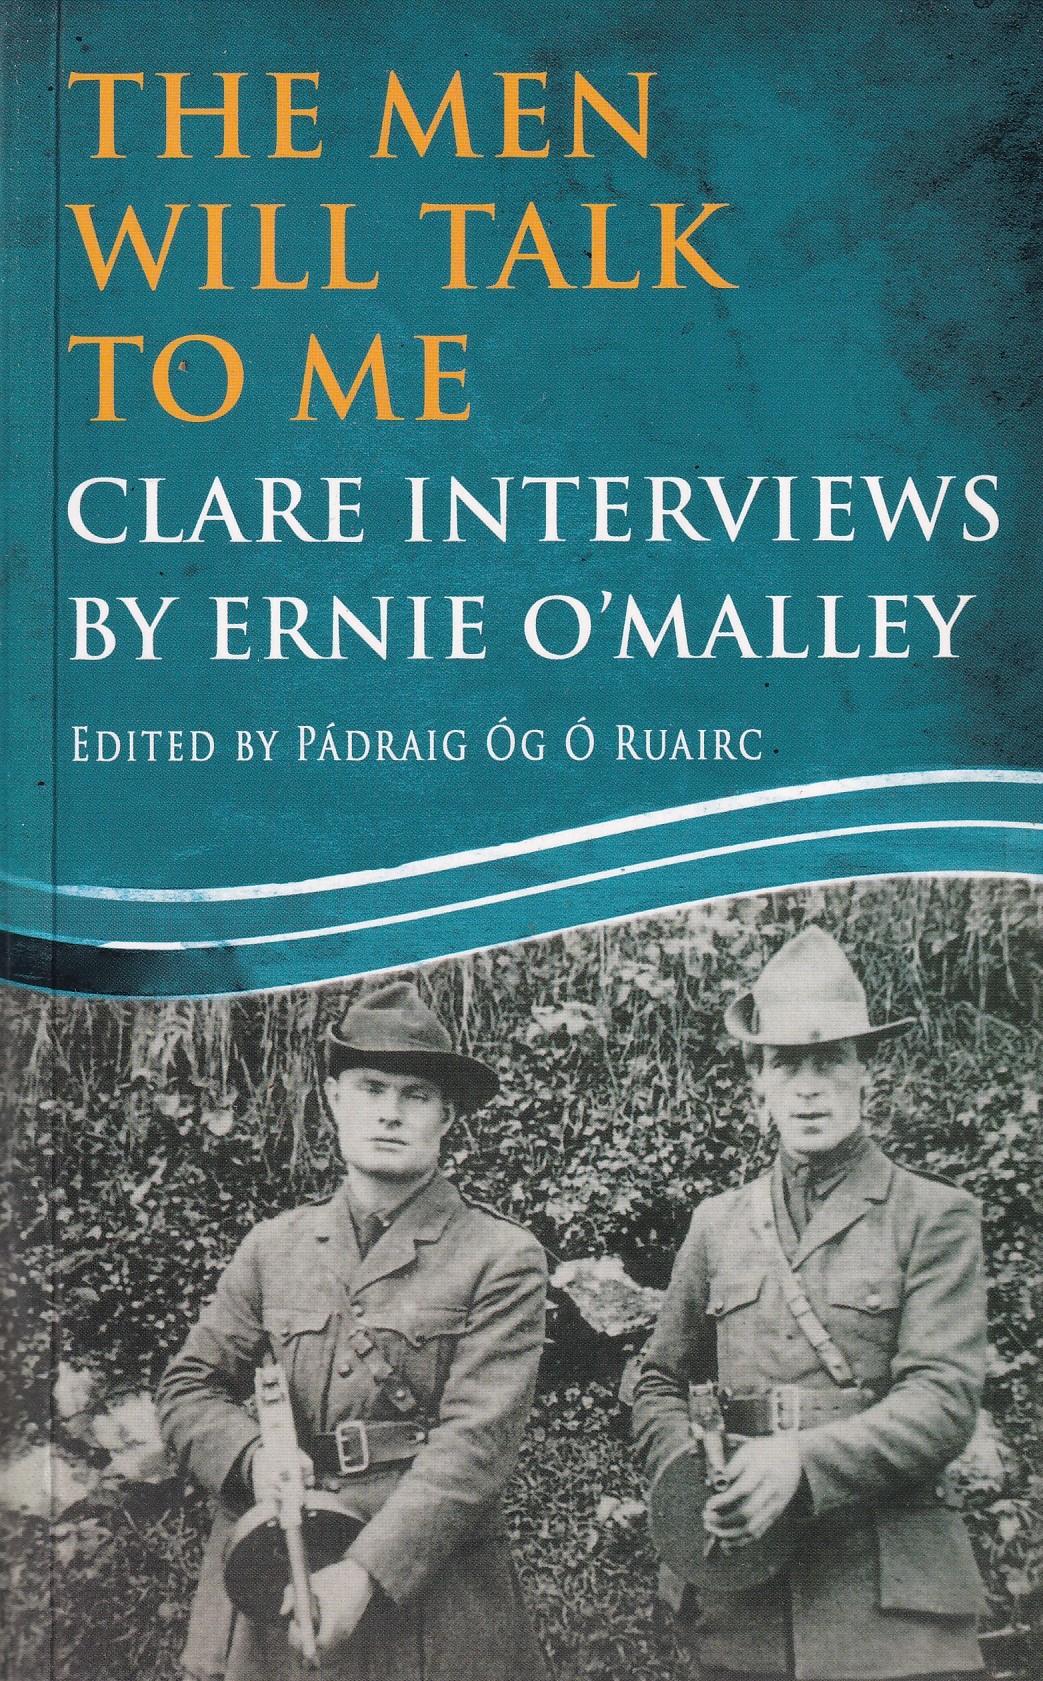 The Men Will Talk to Me : Clare Interviews by Ernie O’Malley | Ernie O'Malley (ed. Pádraig Óg Ó Ruairc) | Charlie Byrne's